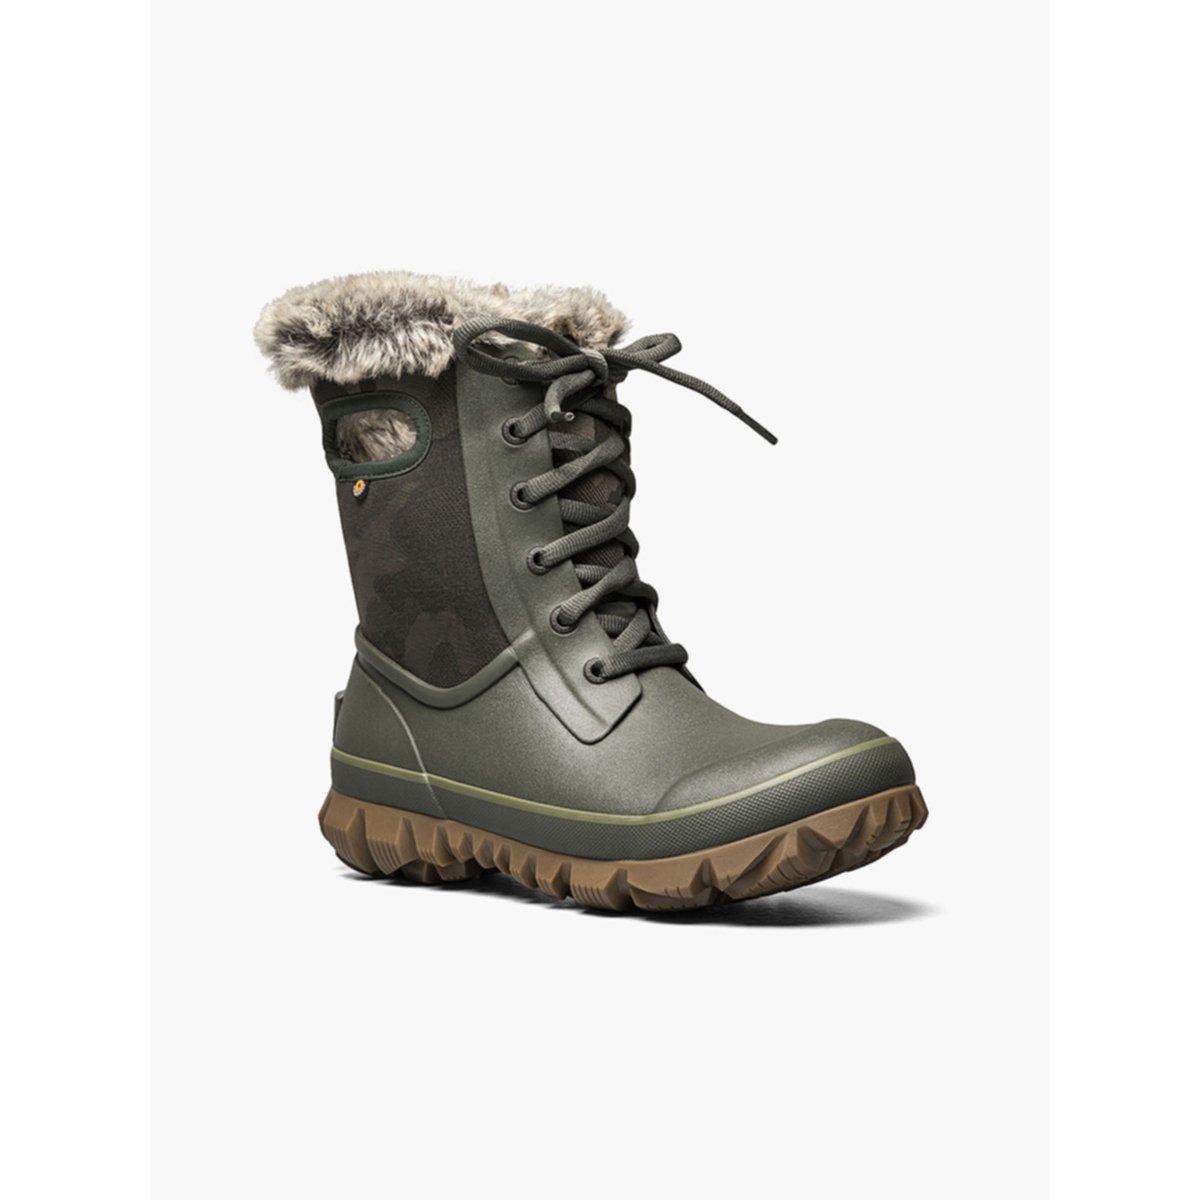 BOGS Women's Arcata Tontal Camo Waterproof Lace Up Snow Boots Dark Green - 72693-301 - Dark Green, 6